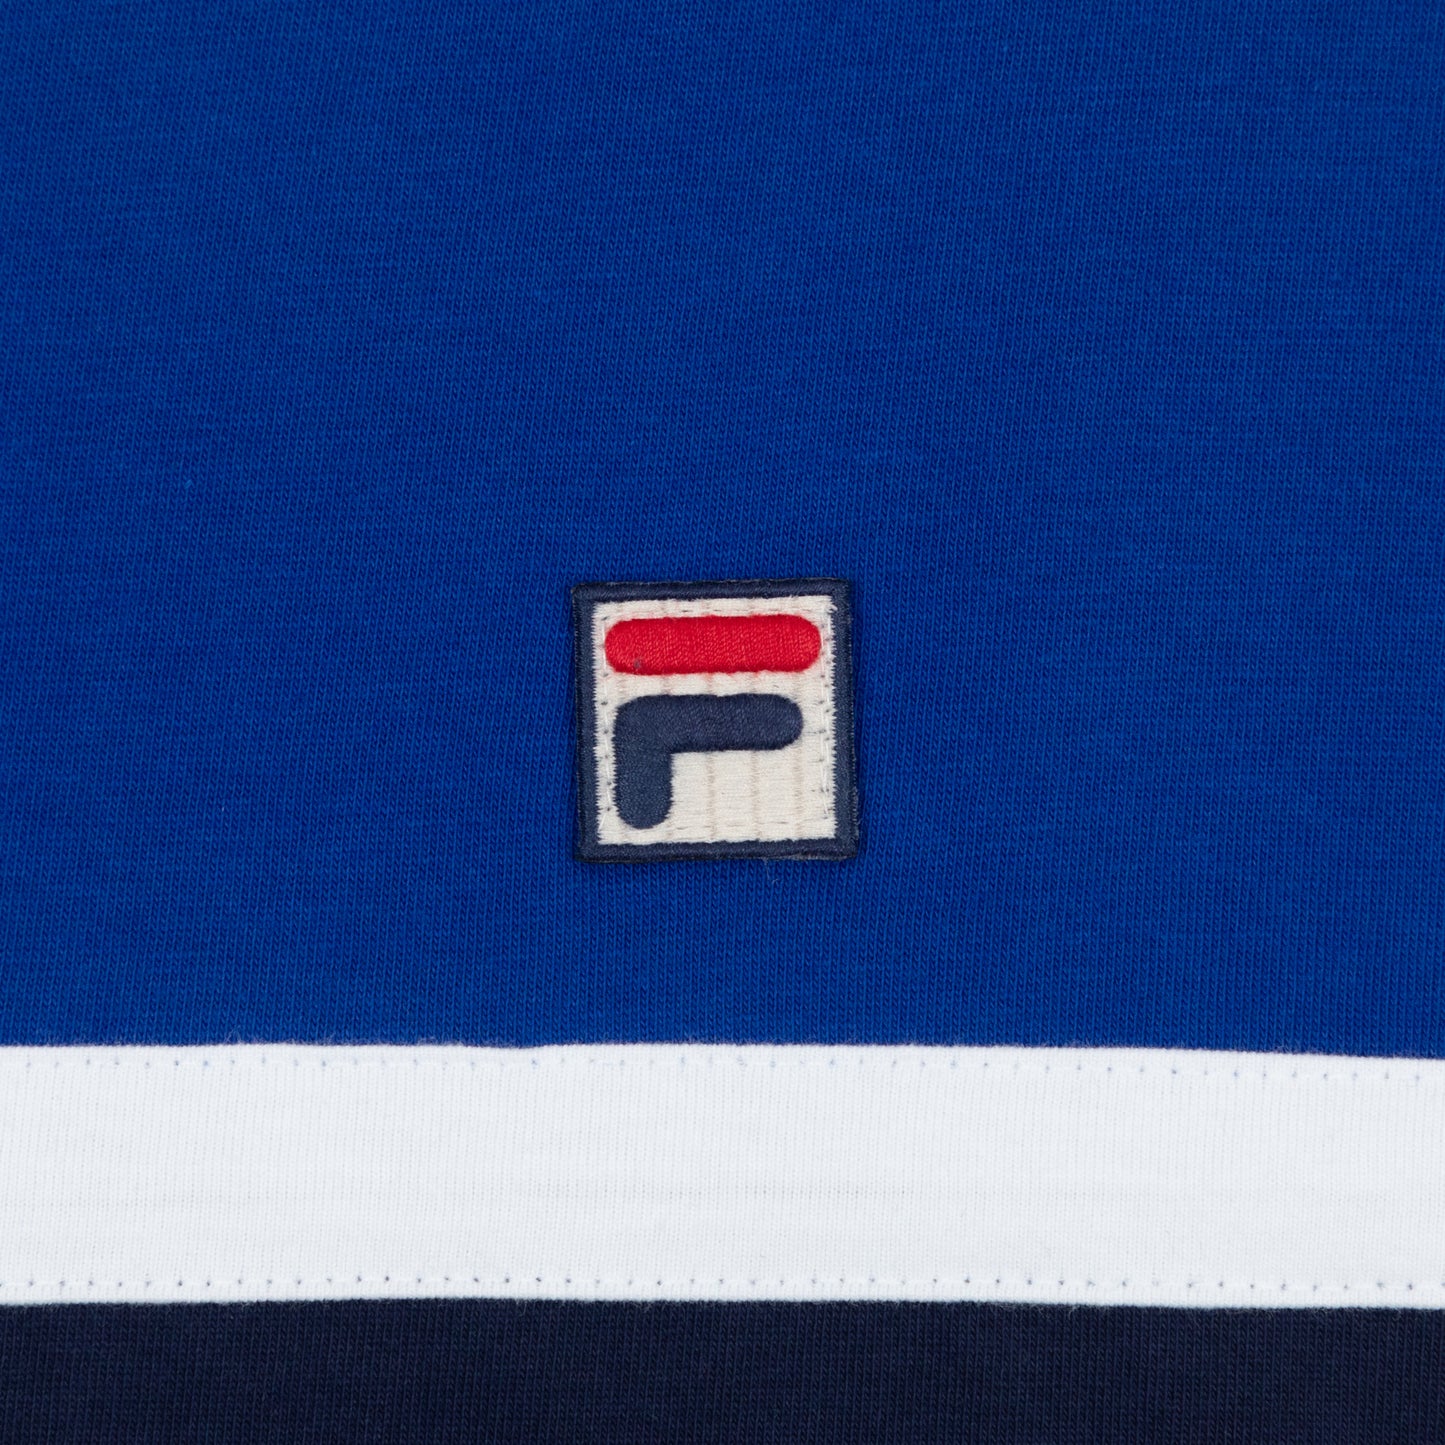 FILA Colour Block T-Shirt in BLUE & WHITE